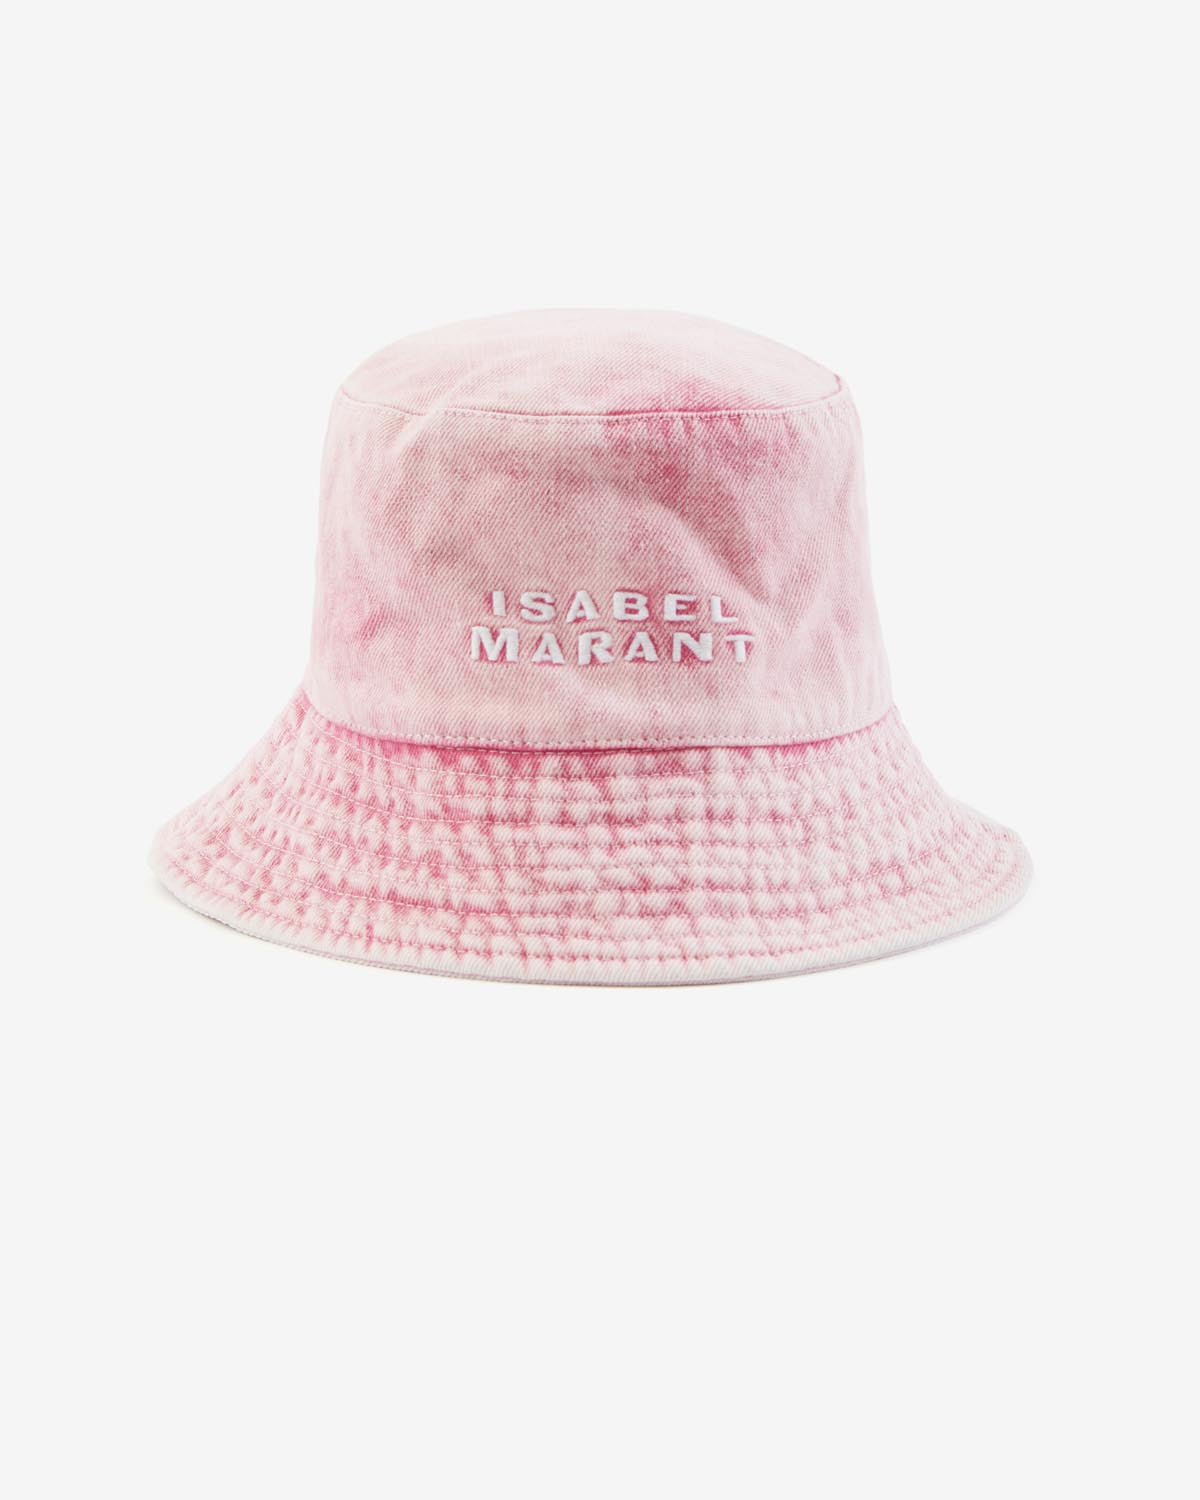 Giorgia cappello Woman Light pink 3